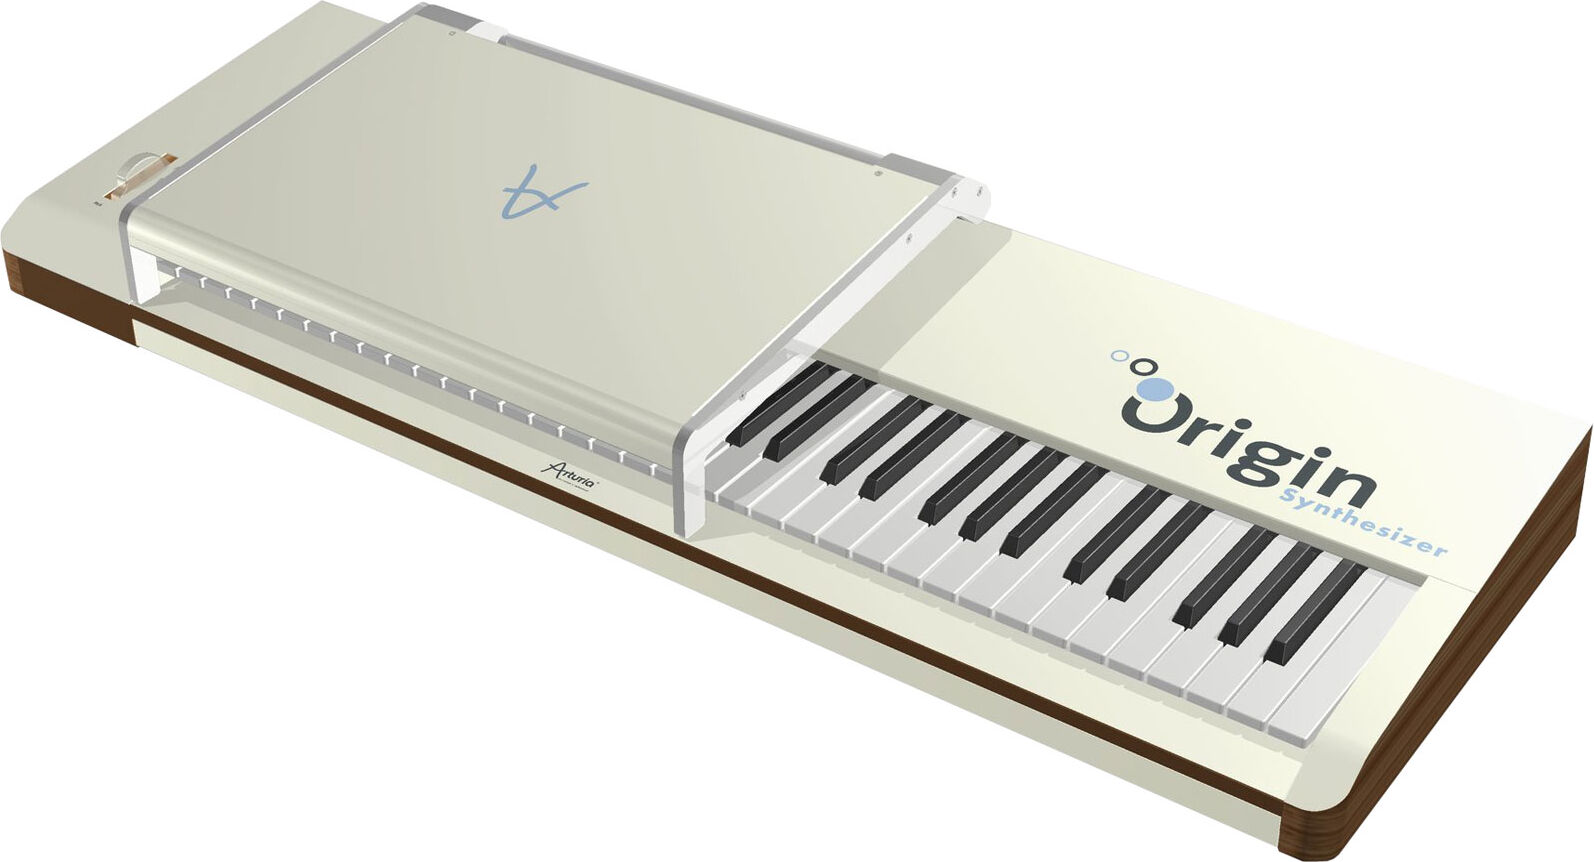 Synthétiseur Arturia origin Keyboard carte mère changée en 2020 par Arturia  